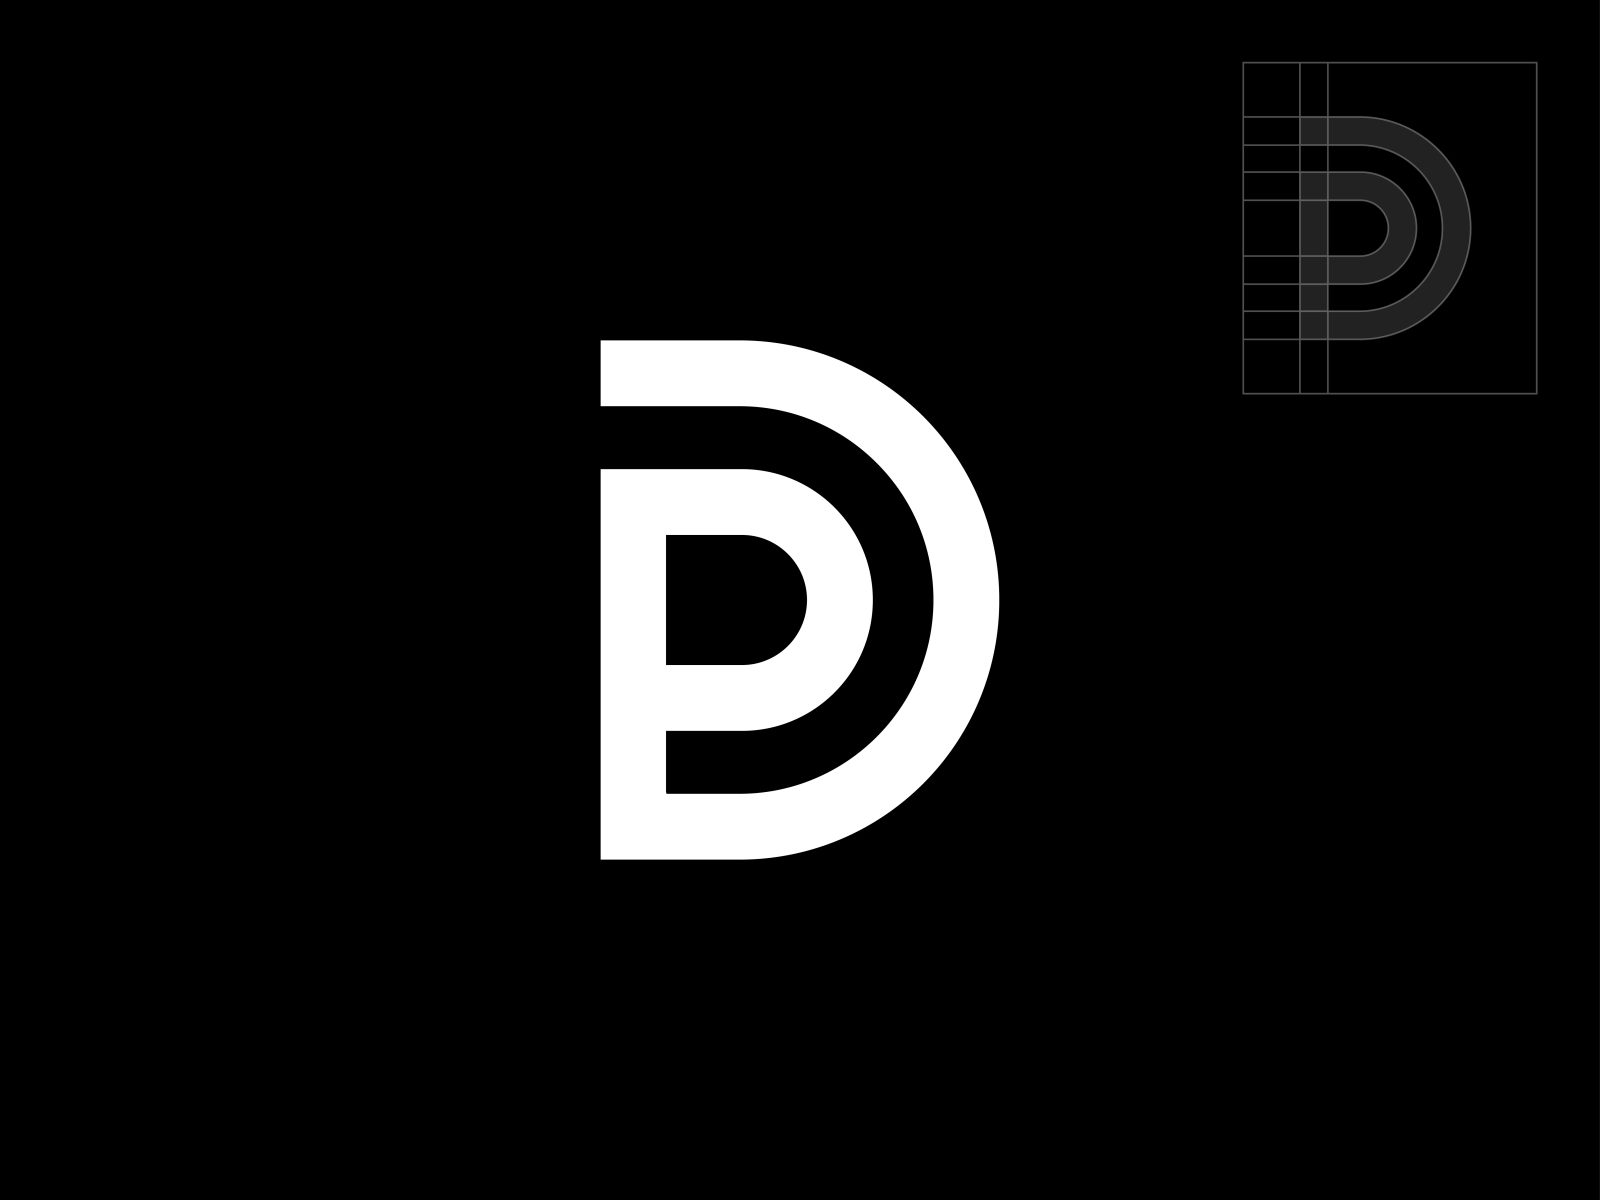 Premium Vector | Pd logo design template vector graphic branding element